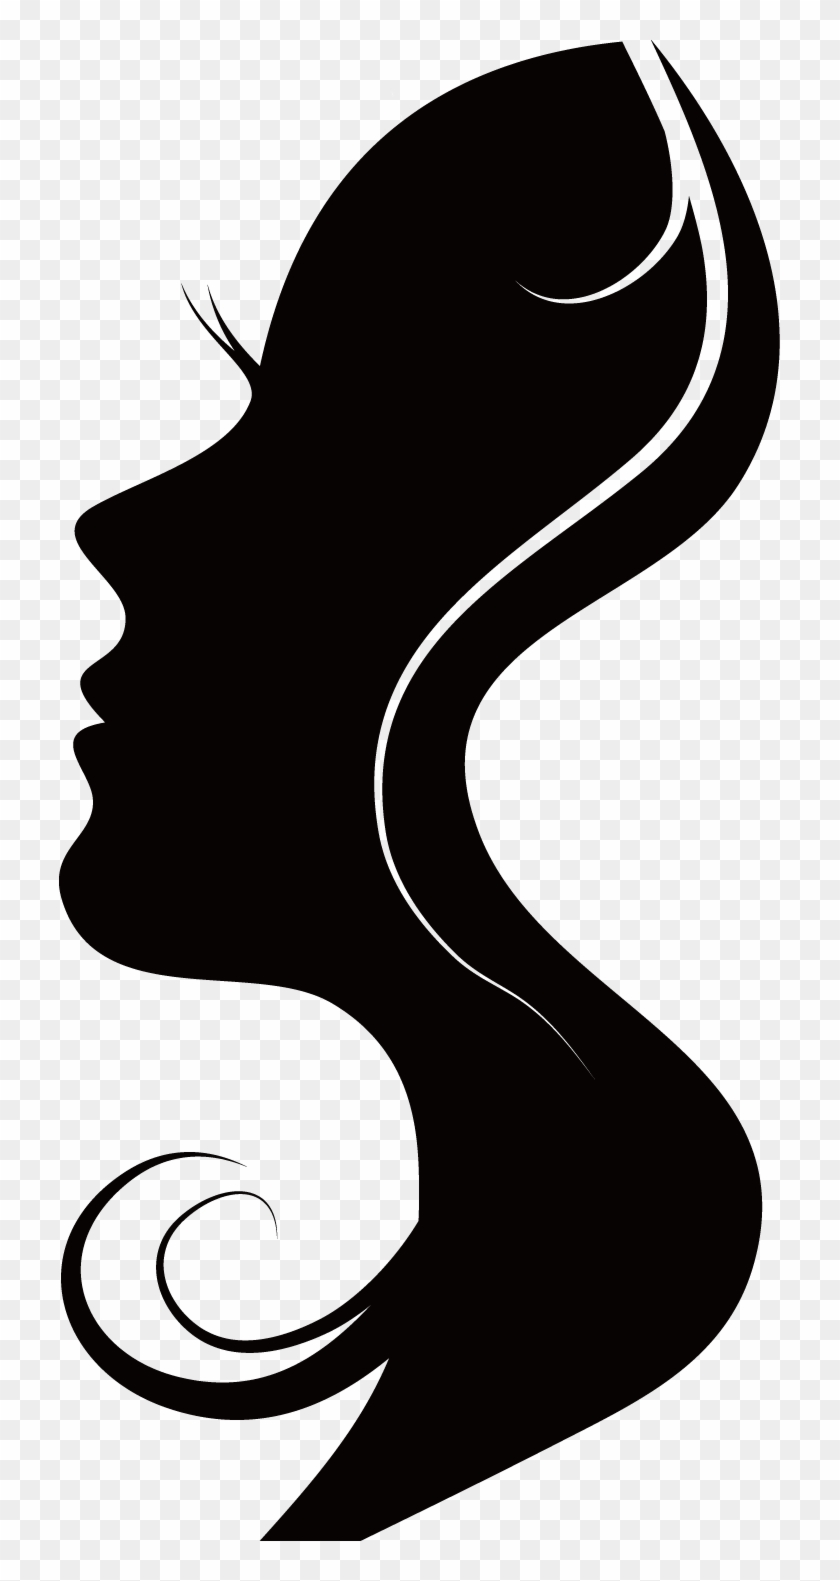 Silhouette Woman - Woman Silhouettes - Imagenes De Siluetas De Mujer #371020